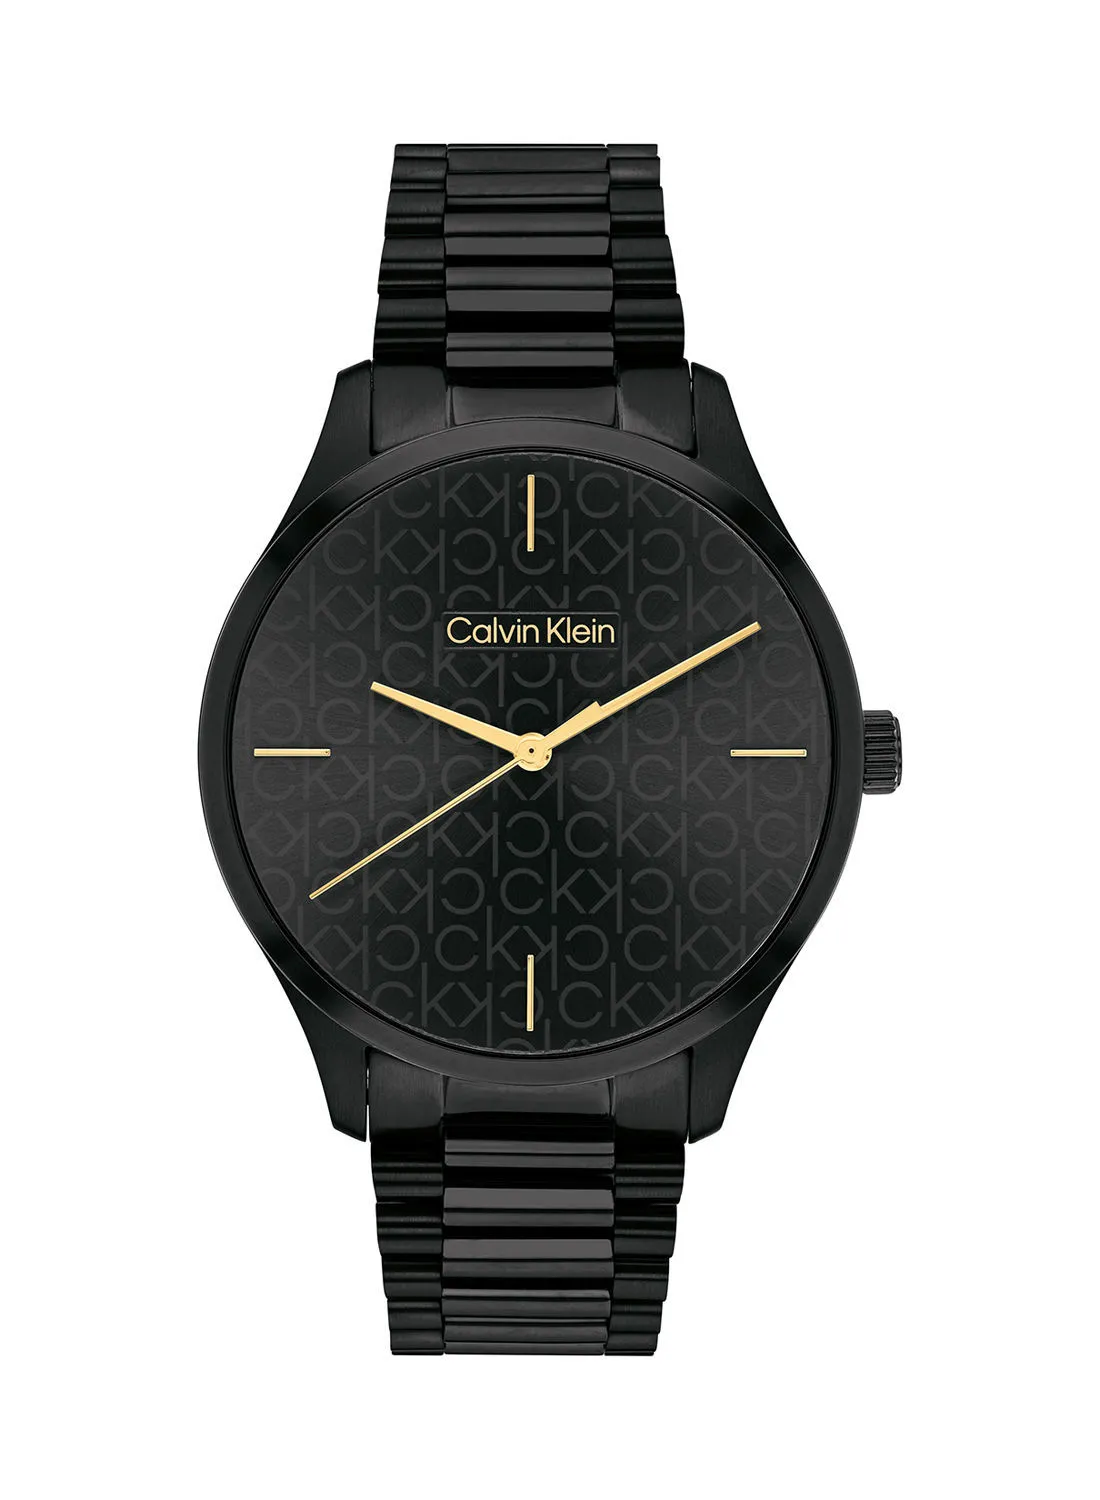 CALVIN KLEIN Iconic Unisex Stainless Steel Watch - 25200170